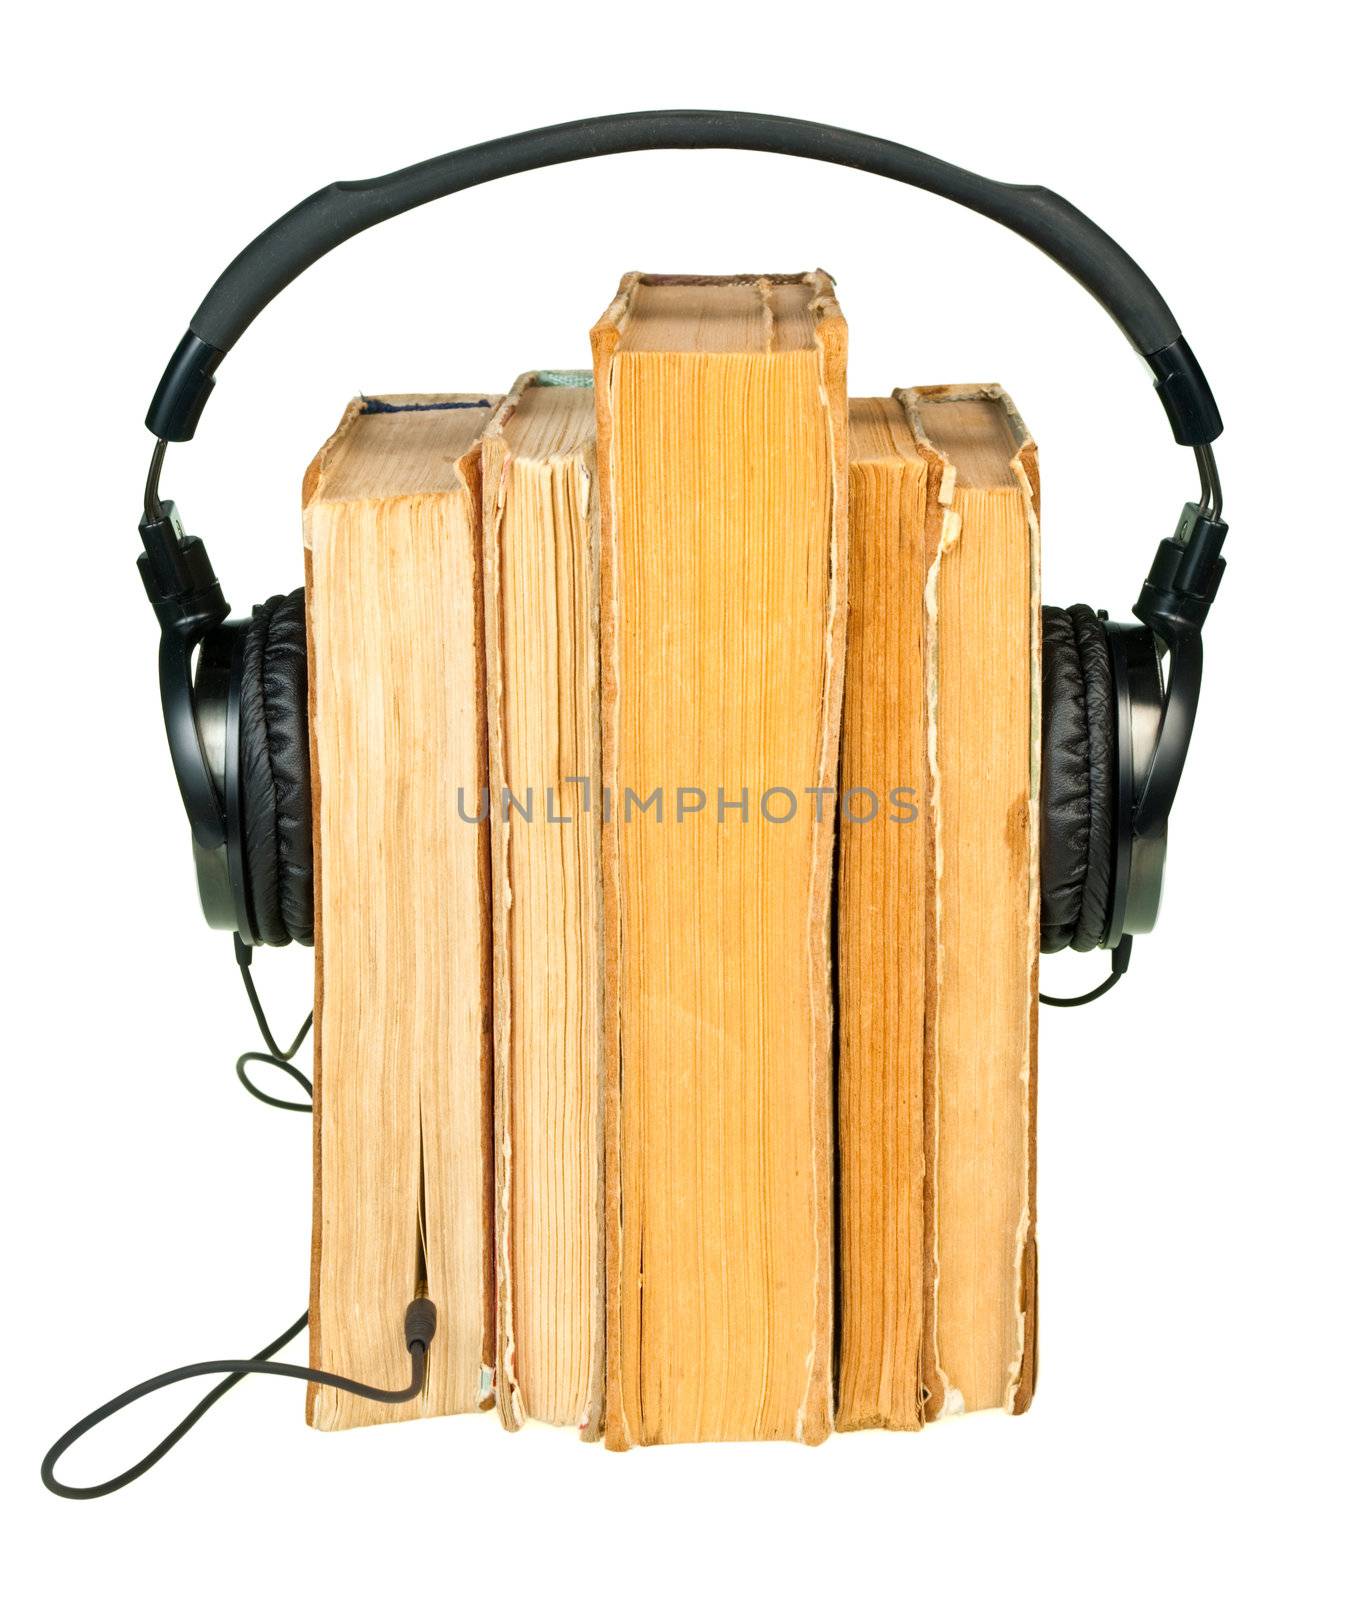 HI-Fi headphones on old books row isolated on white